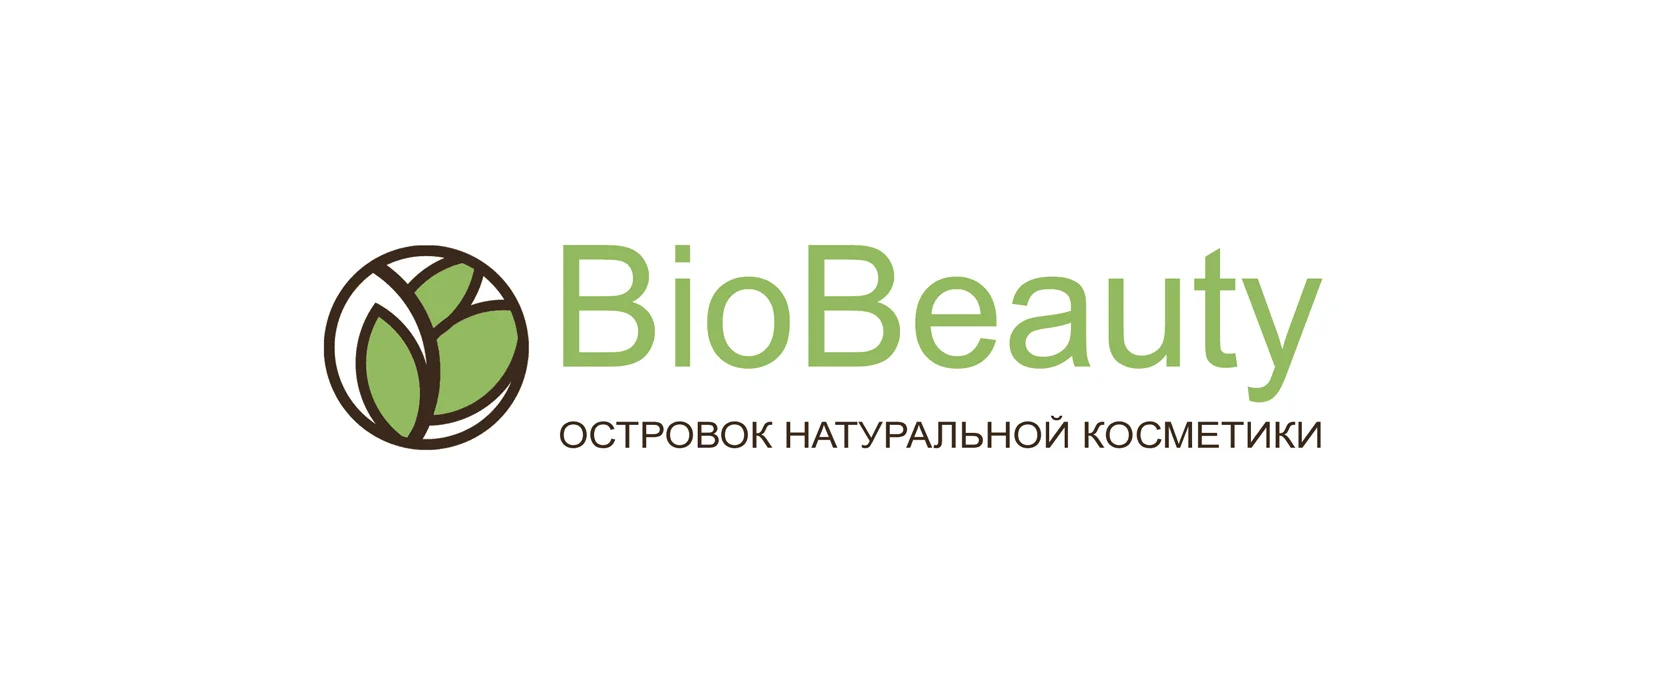 BioBeauty - магазин натуральной косметики